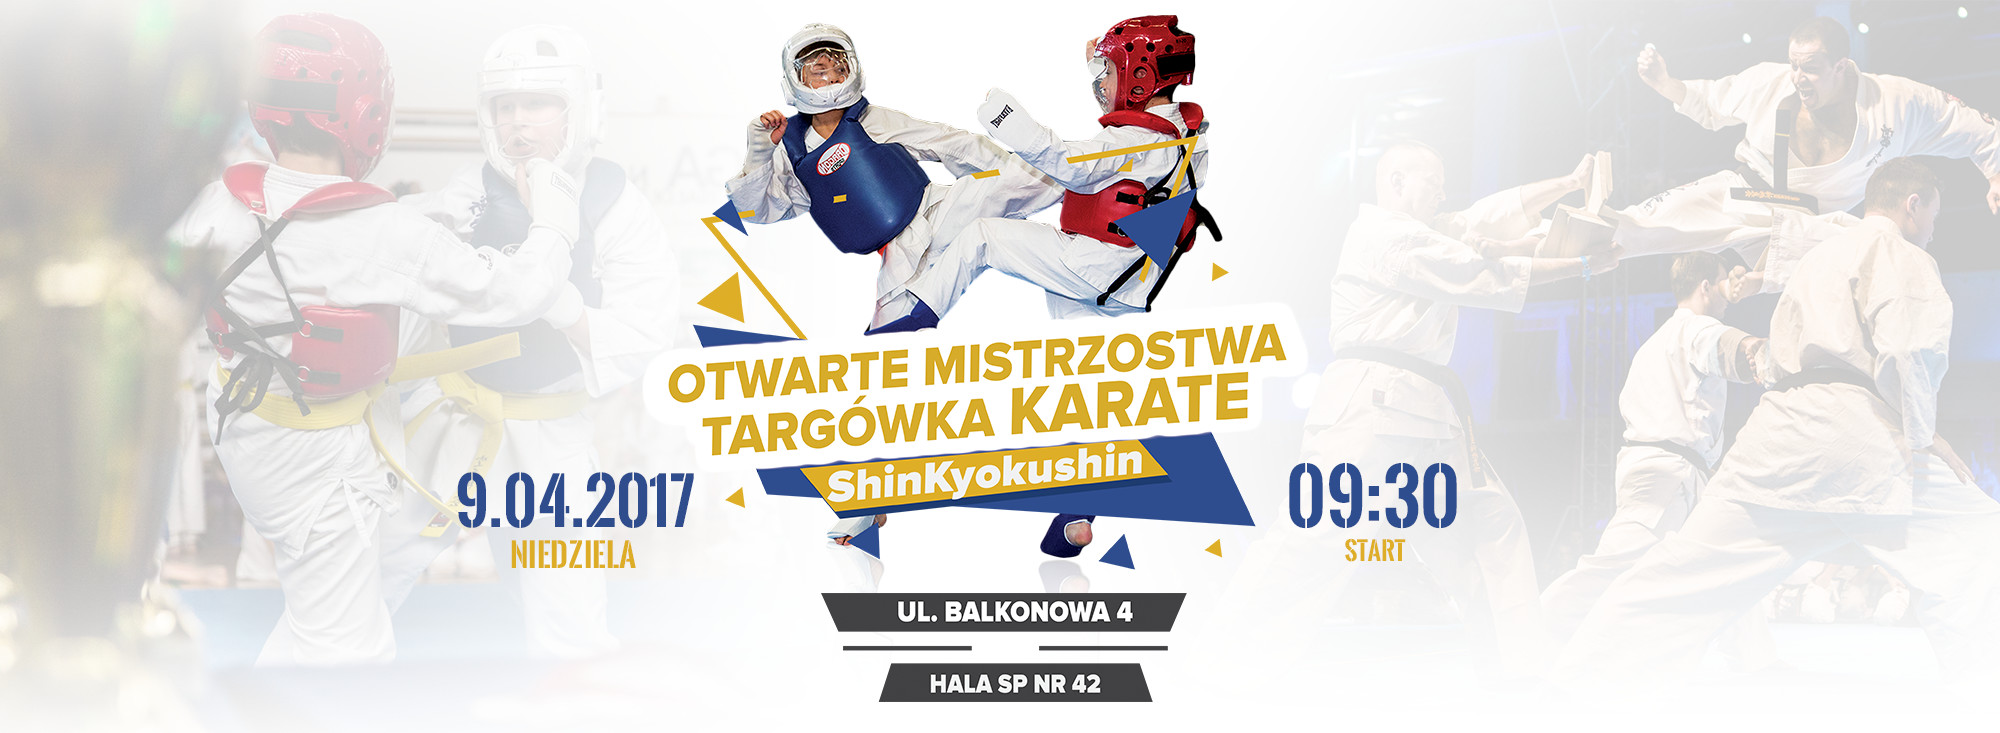 Otwarte Mistrzostwa Targówka Karate Shinkyokushin!